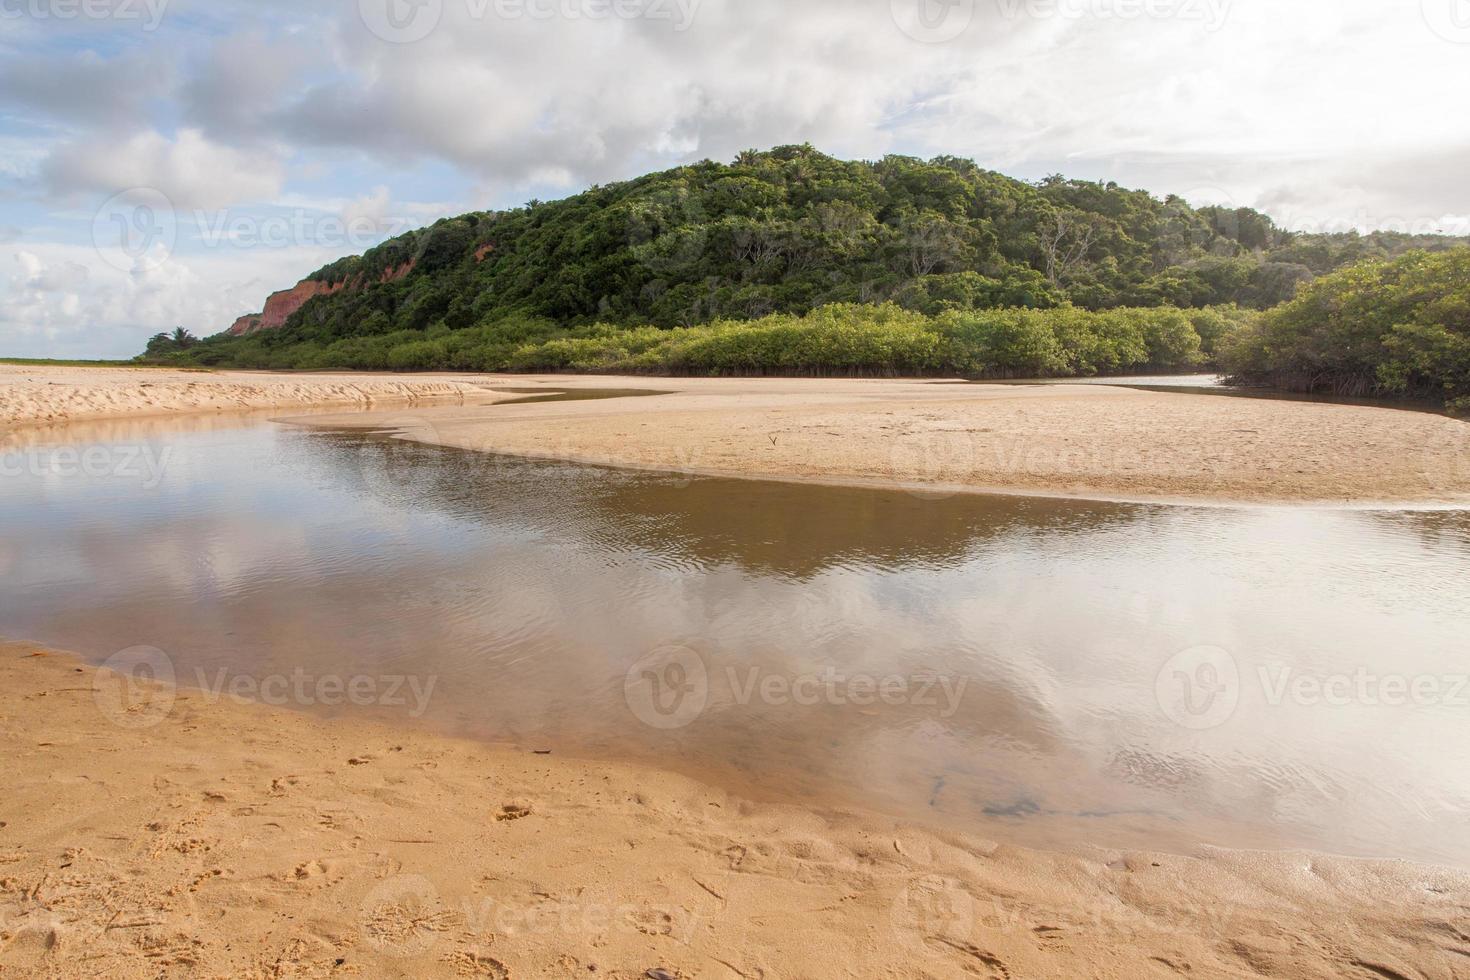 río que desemboca en la playa de taipe cerca de arraial d ajuda, bahia, brasil foto